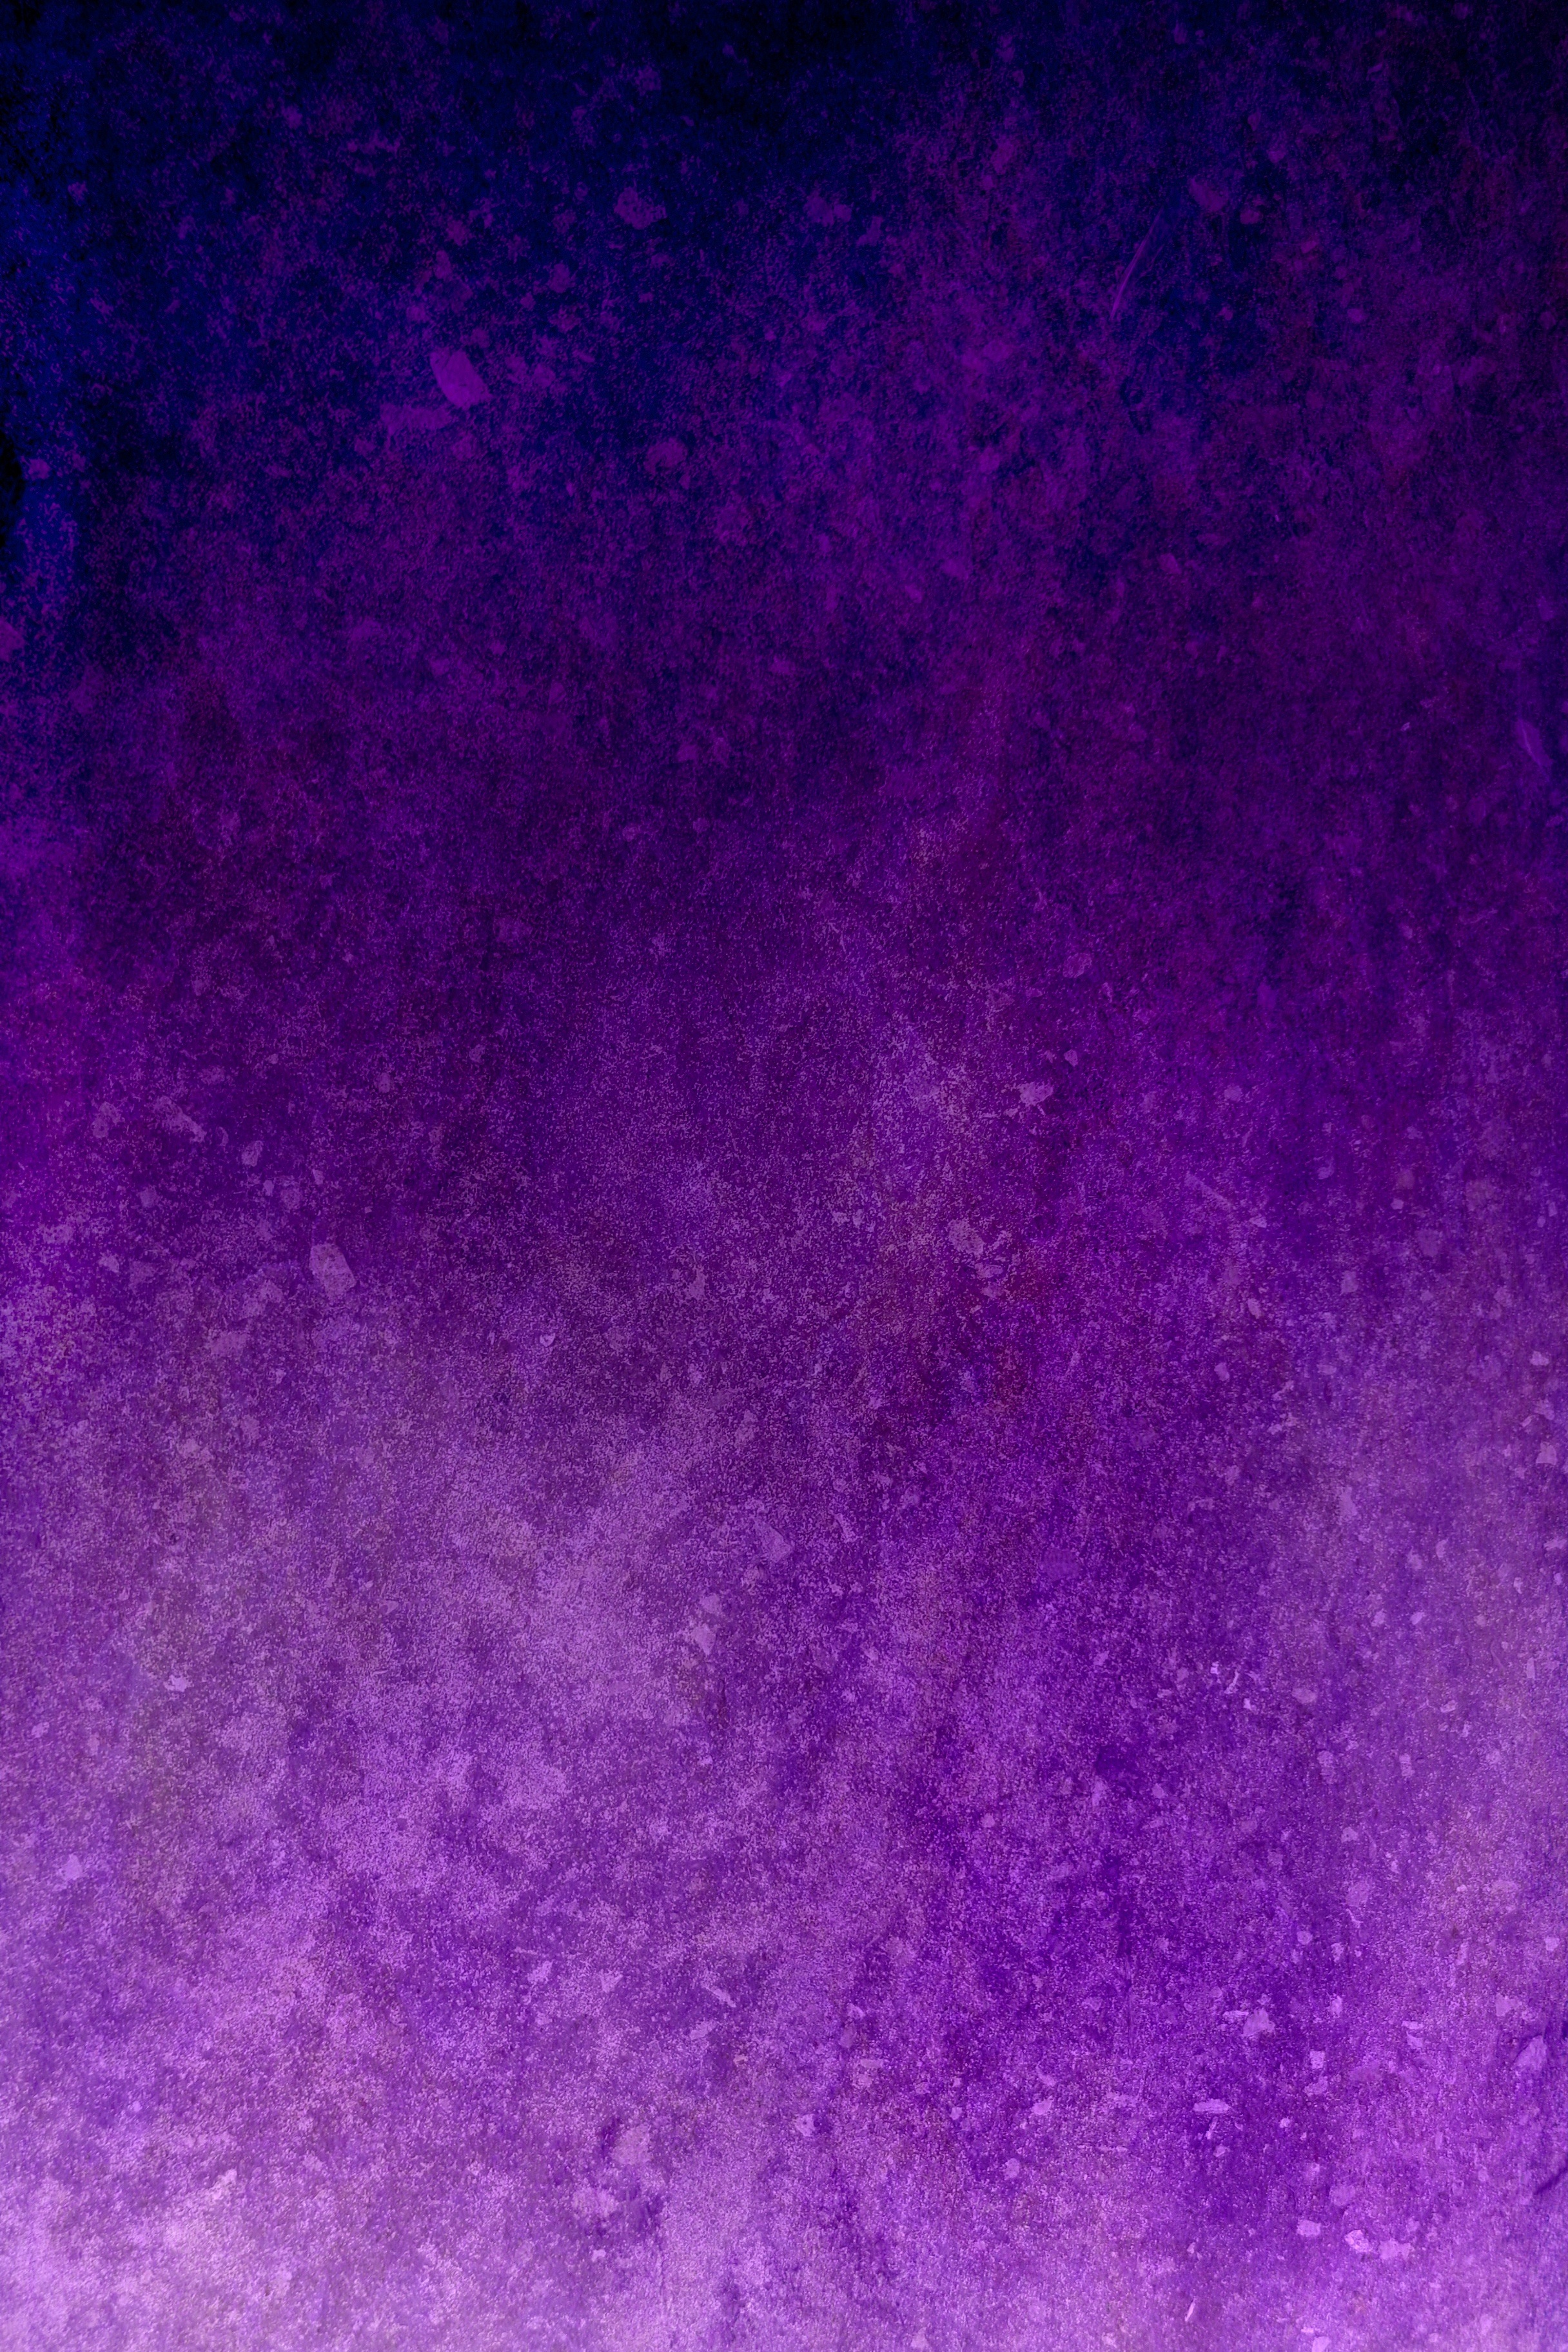  Violet Cellphone FHD pic